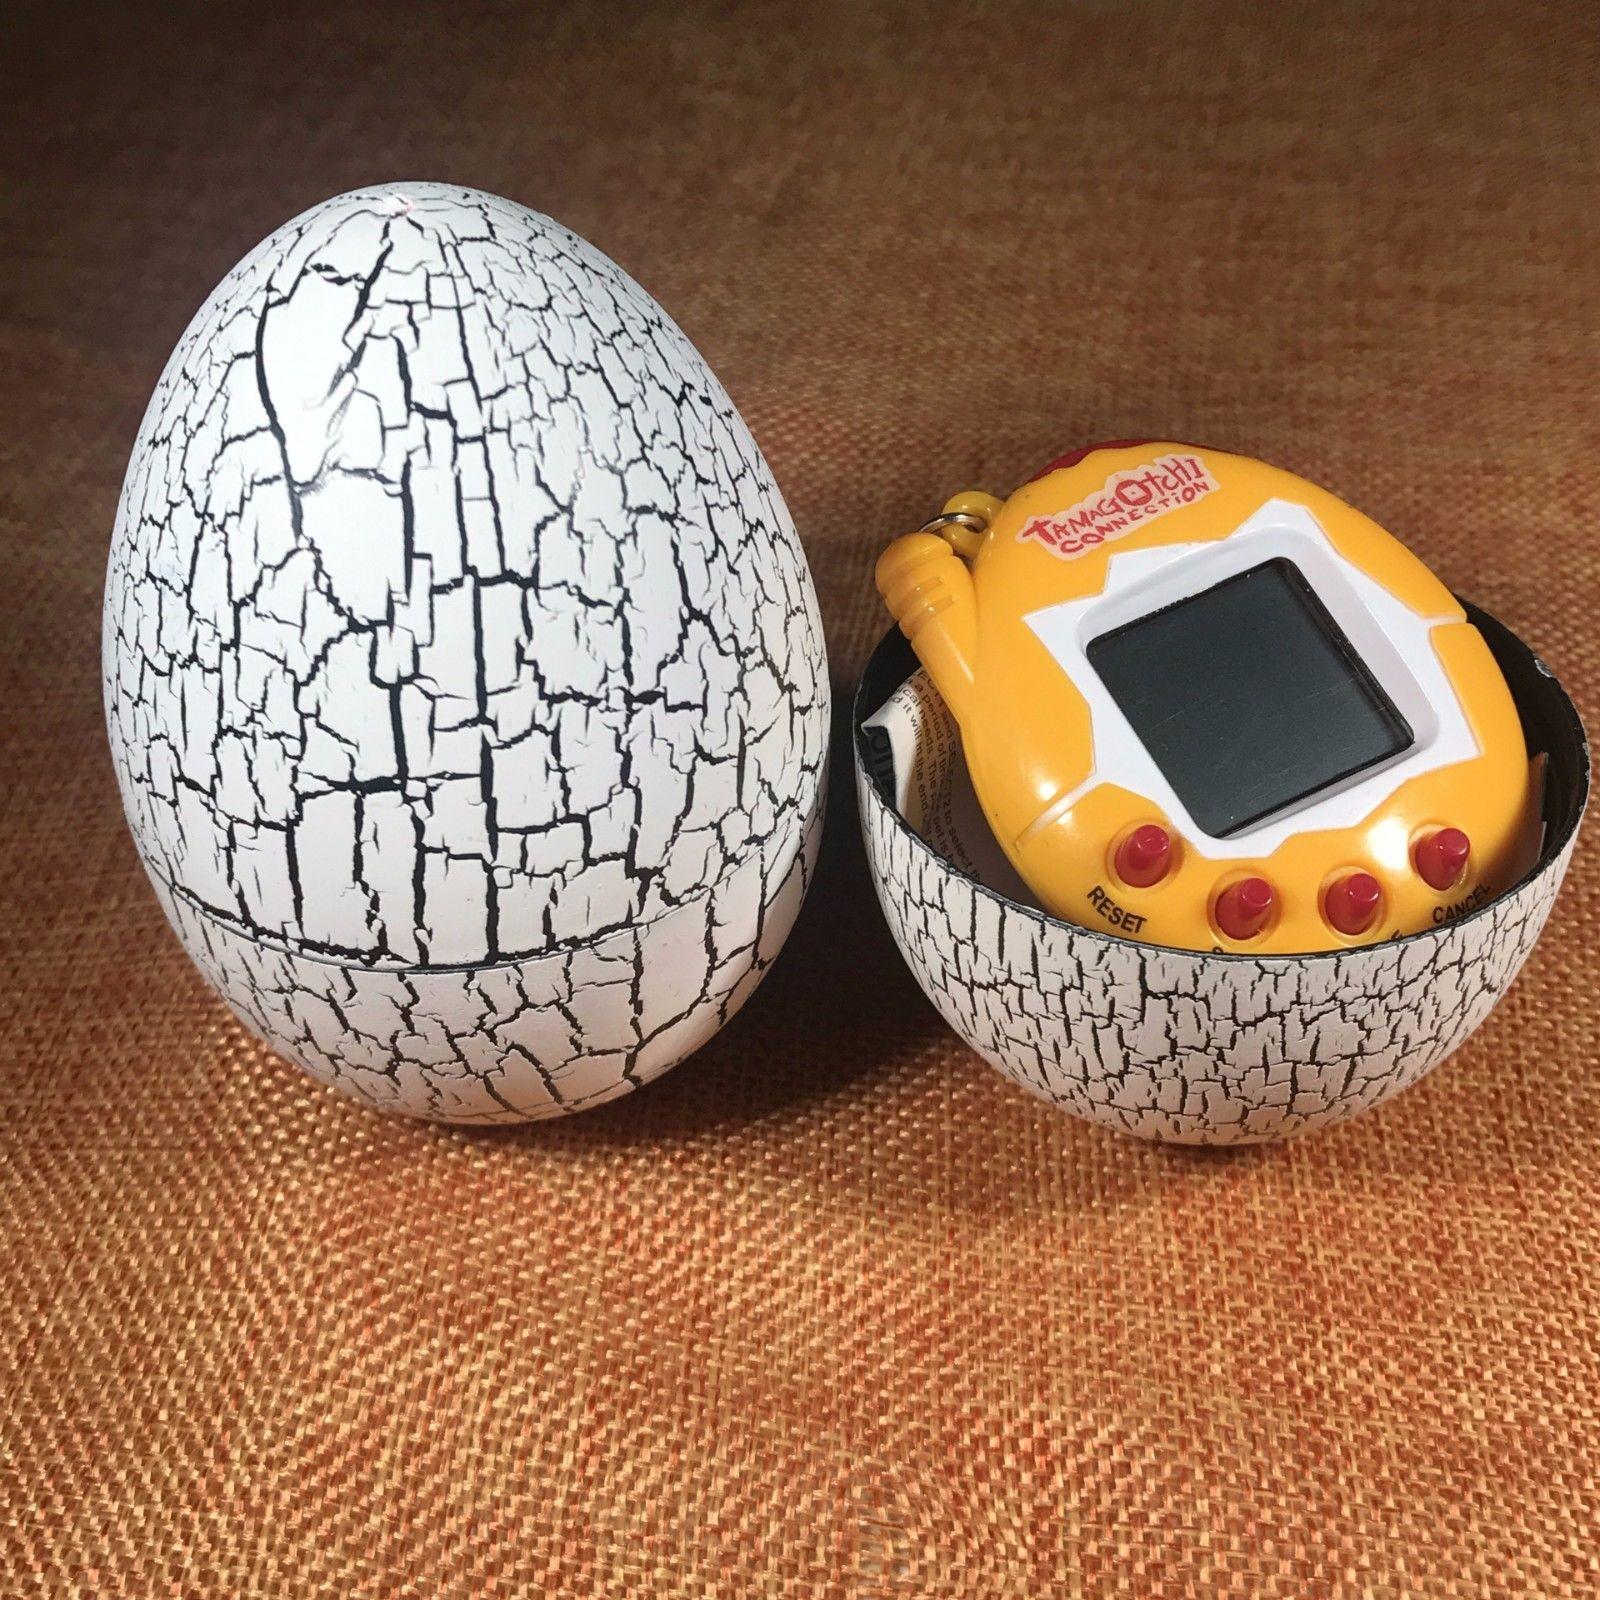 Фото 1 Игрушка электронный питомец Тамагочи в Яйце Динозавра CG Eggshell Game White